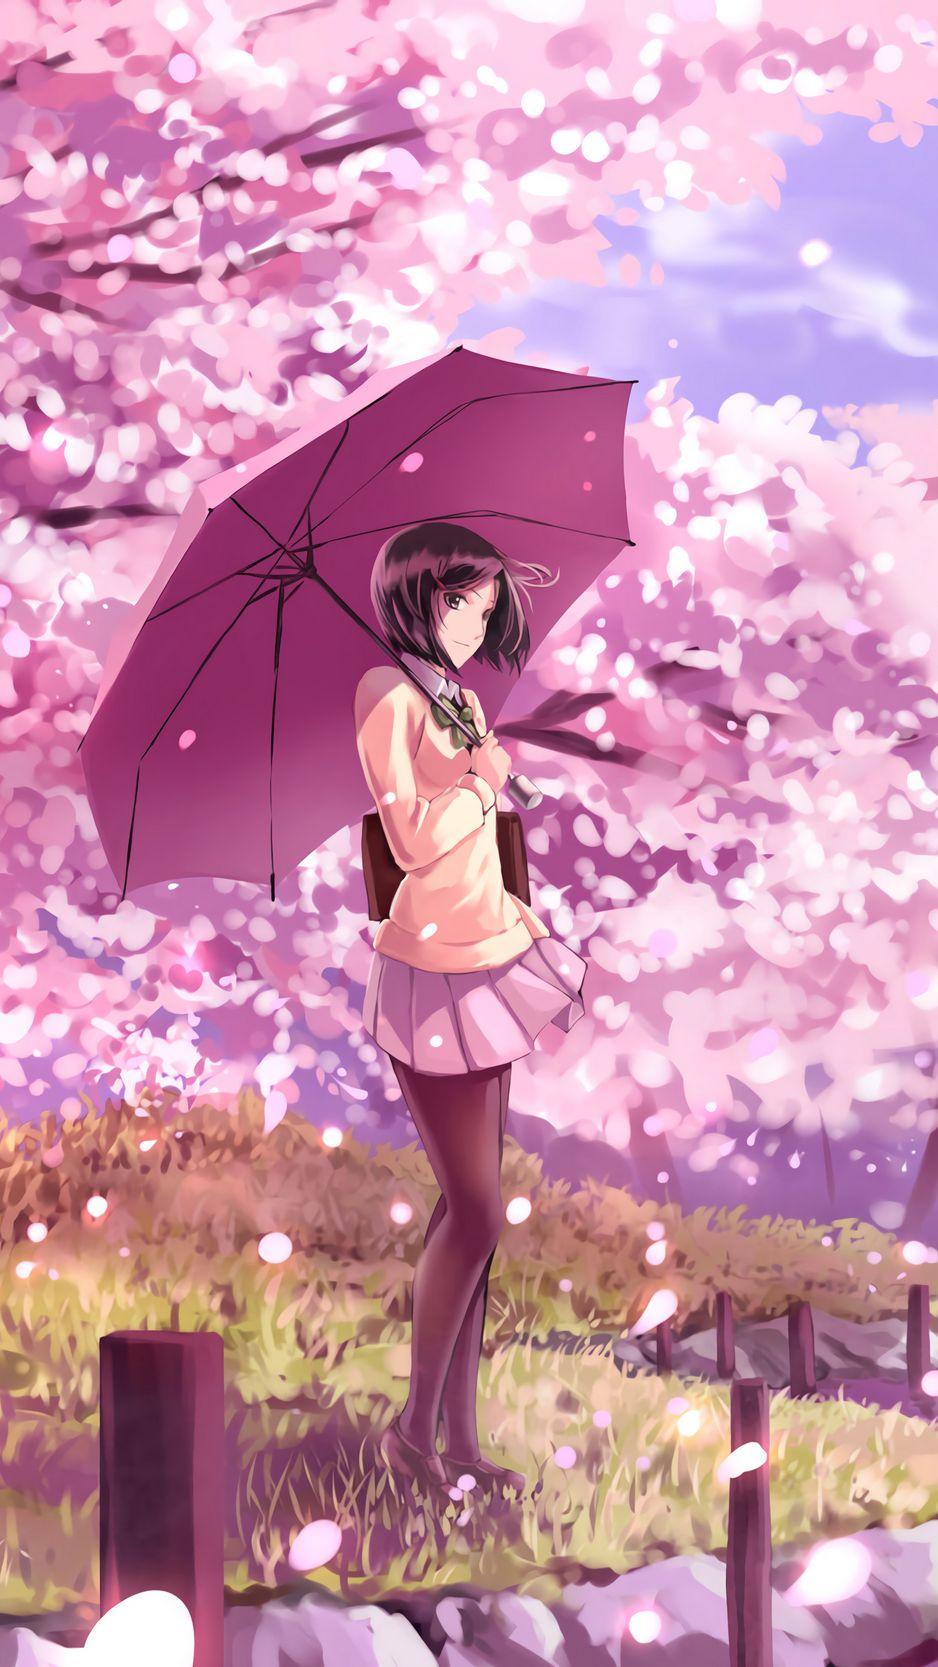 Wallpaper Girl Umbrella Sakura Anime Art